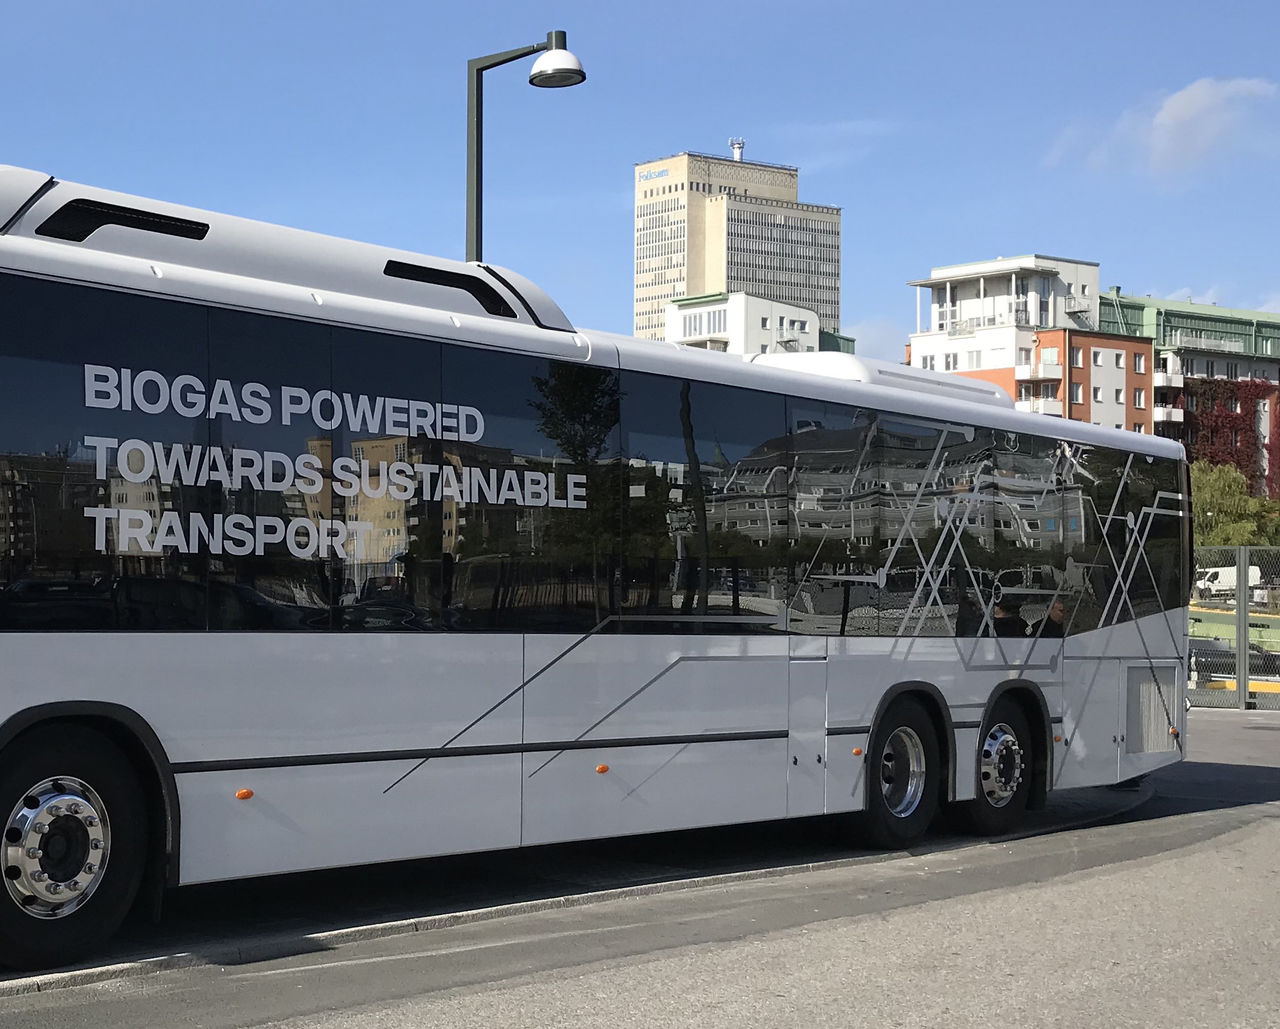 Biogasbuss i stadstrafik